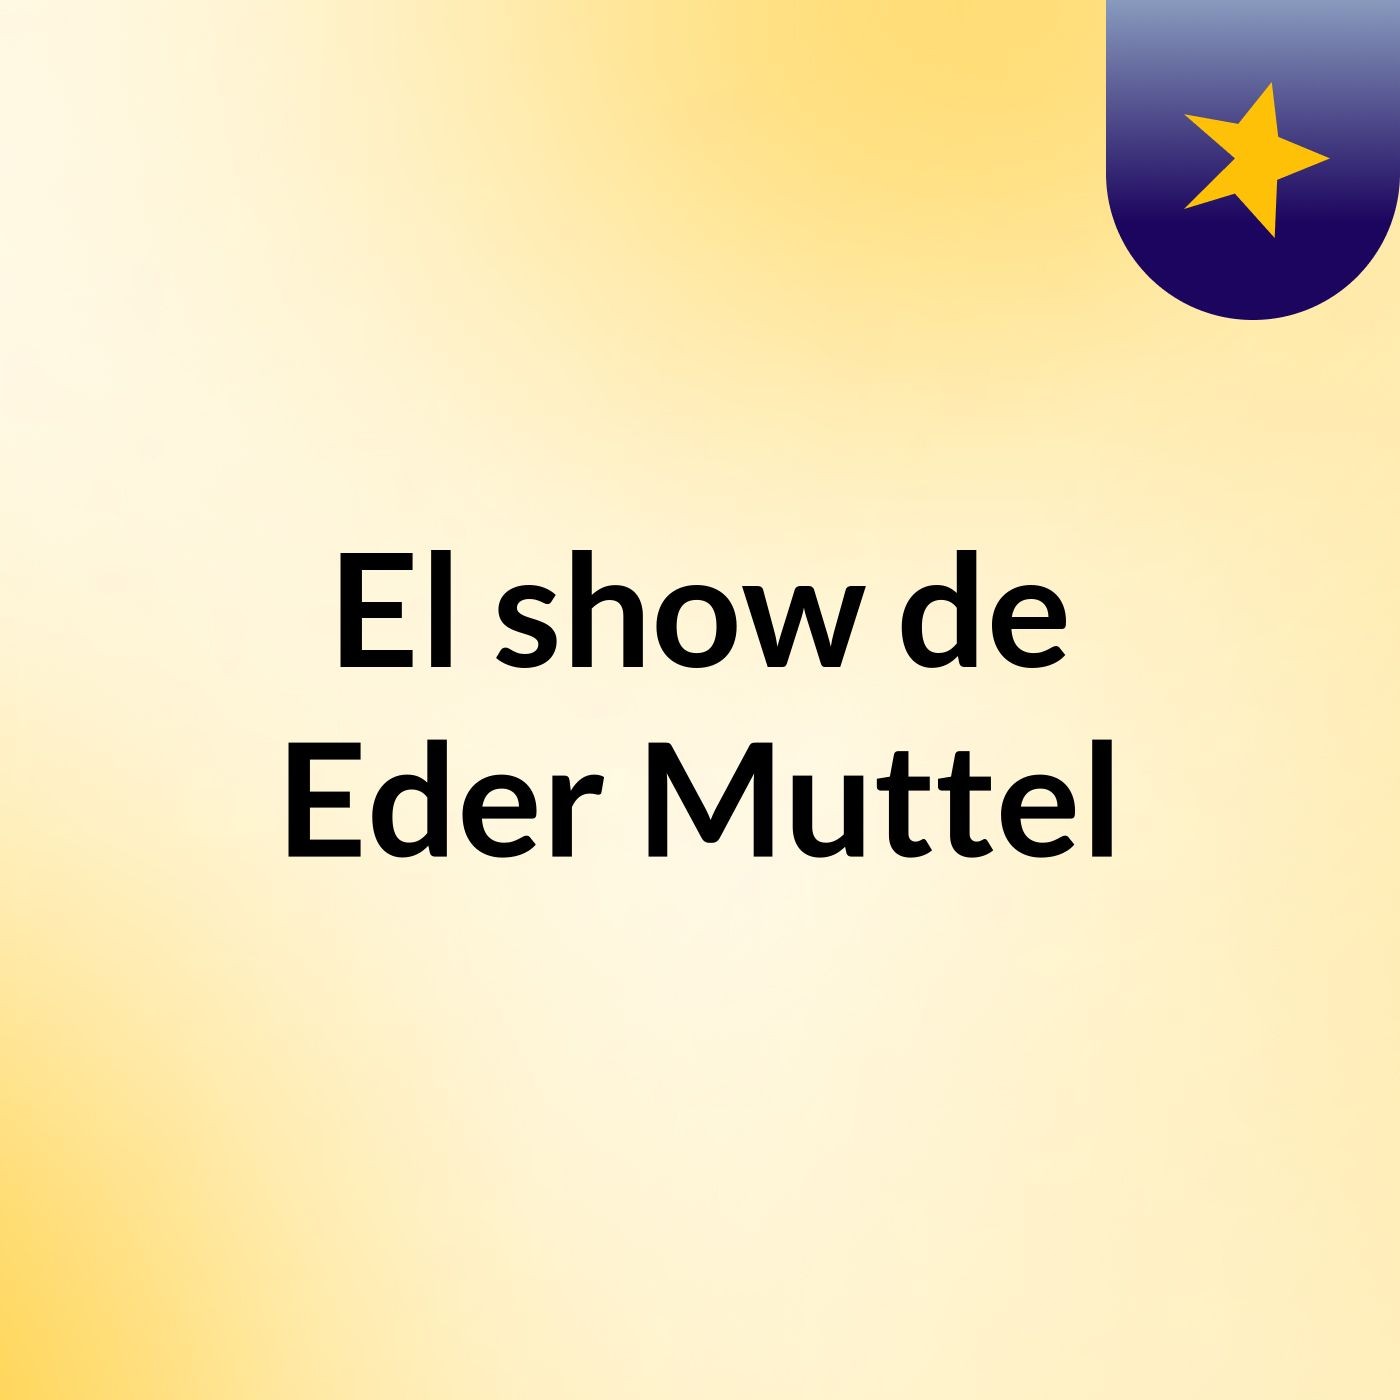 El show de Eder Muttel